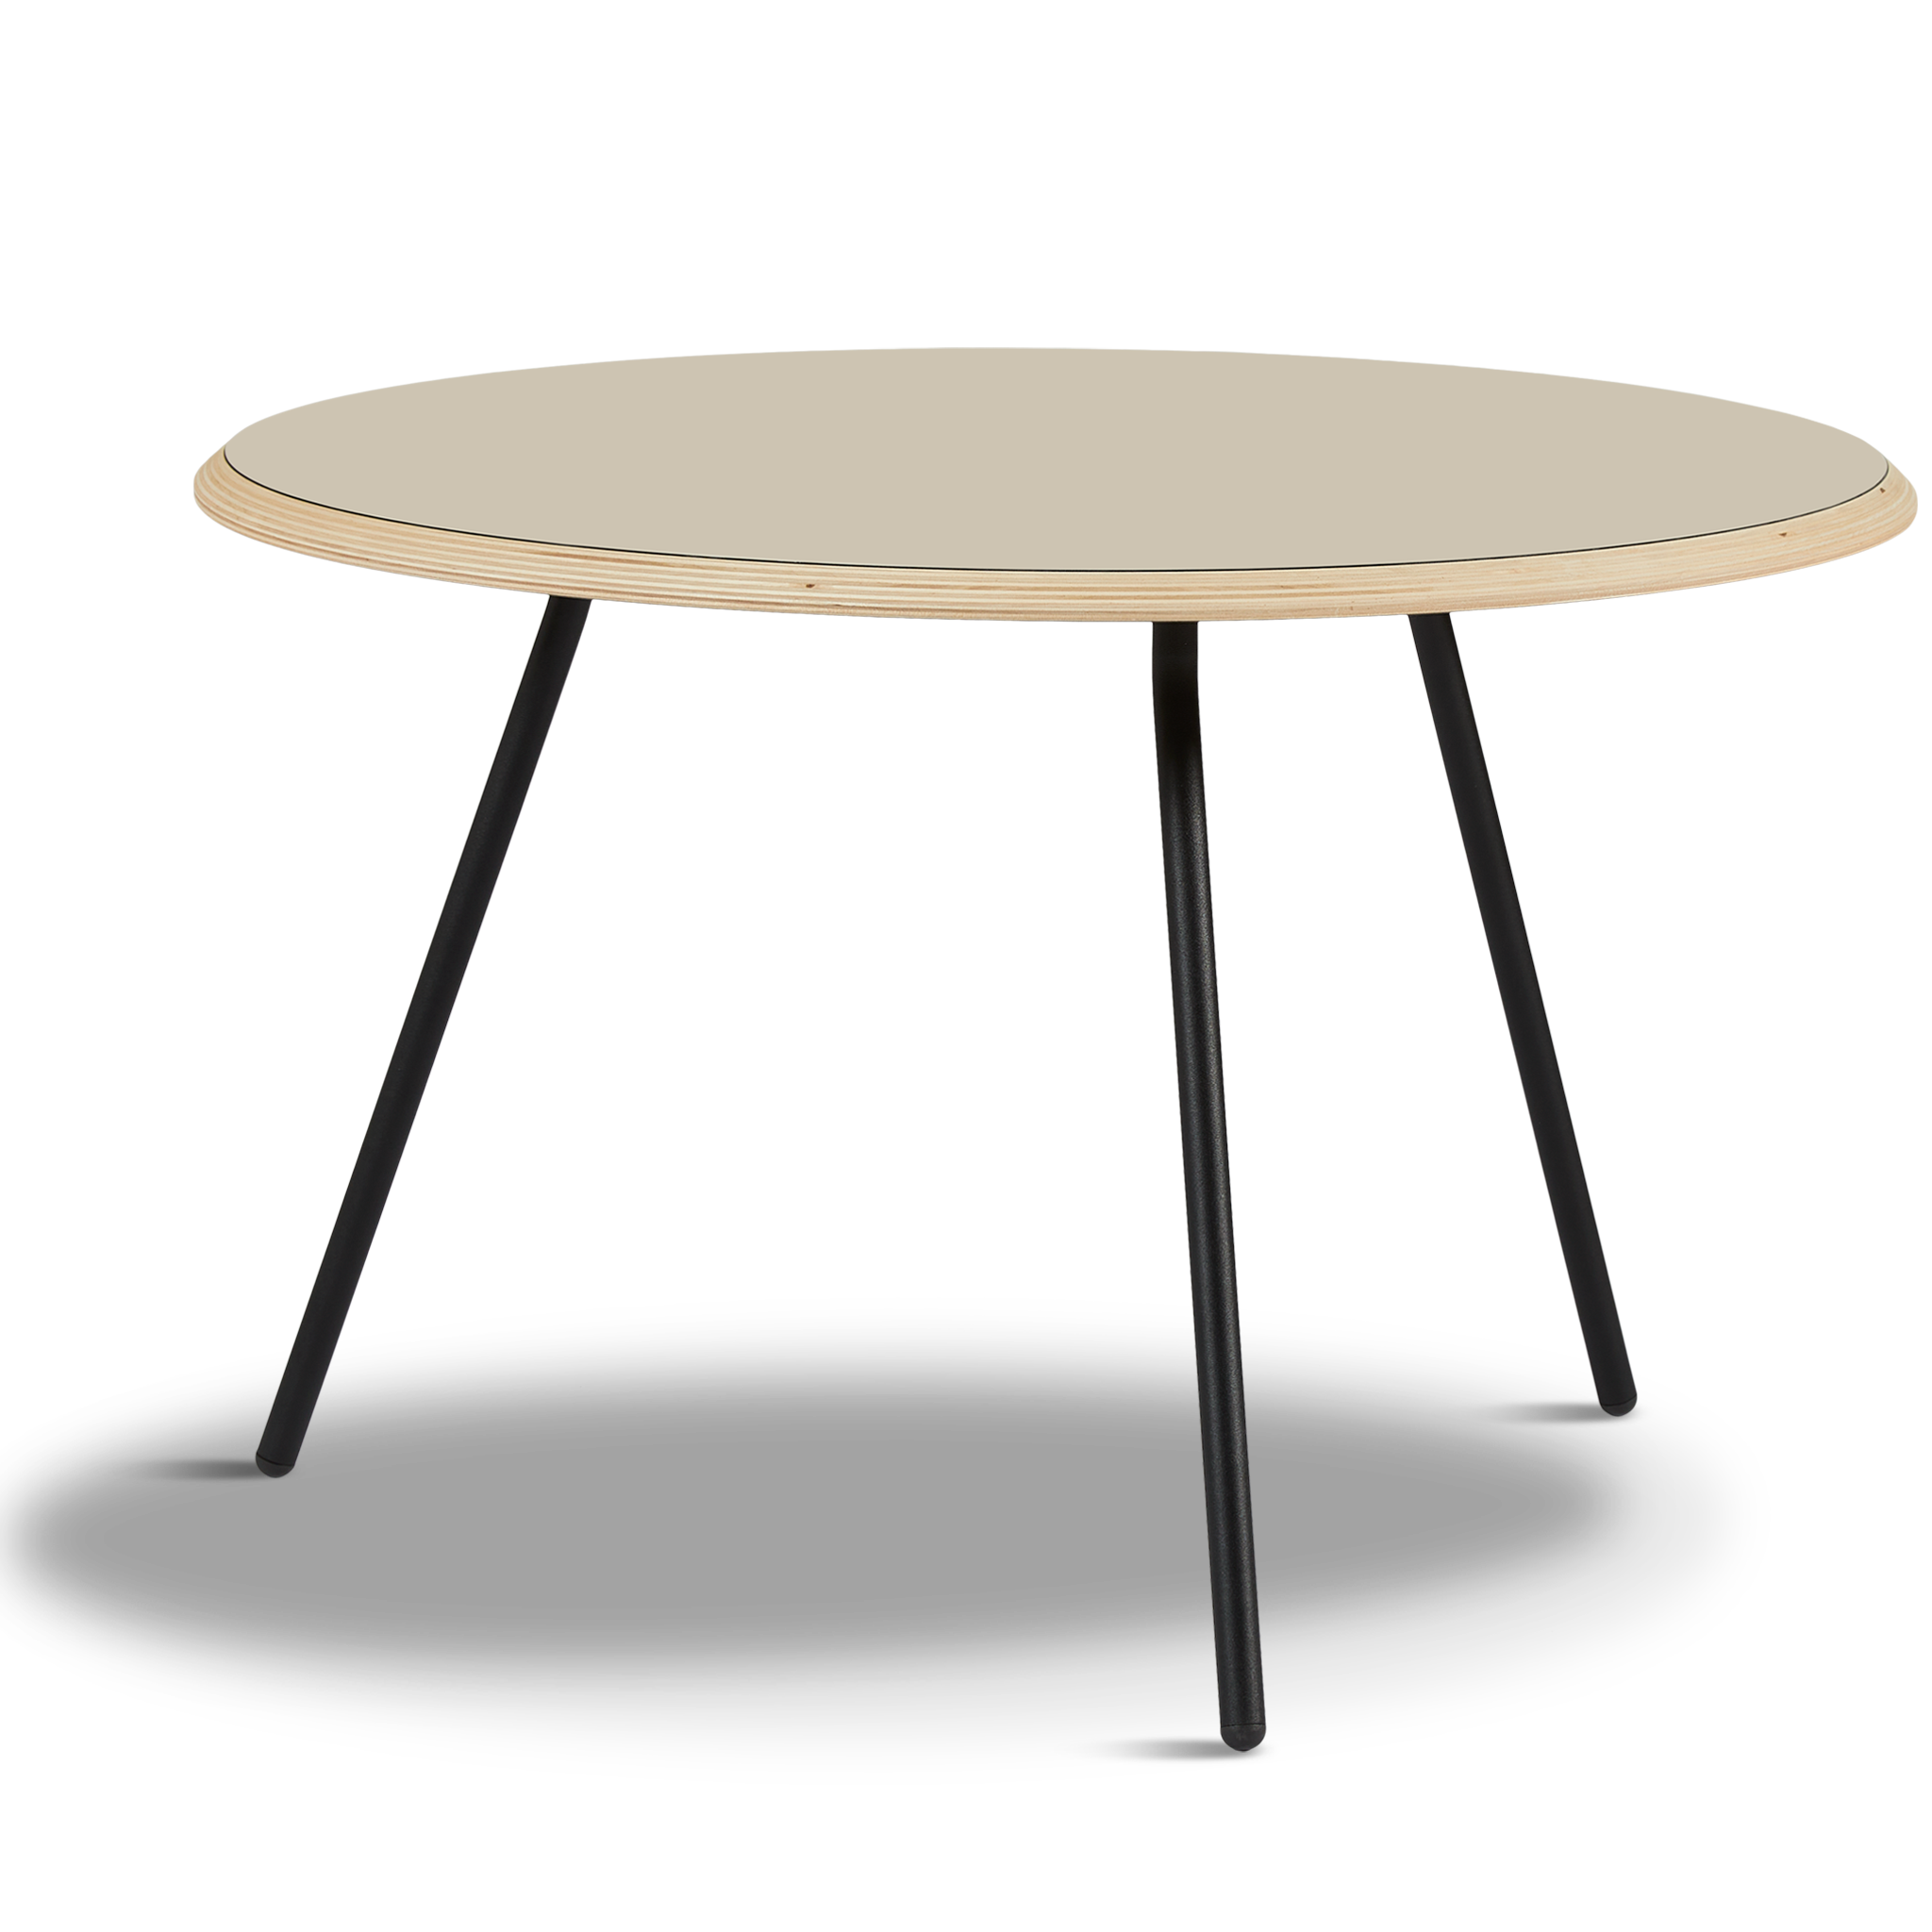 WOUD -  Soround coffee table - Beige (Ø75xH49)